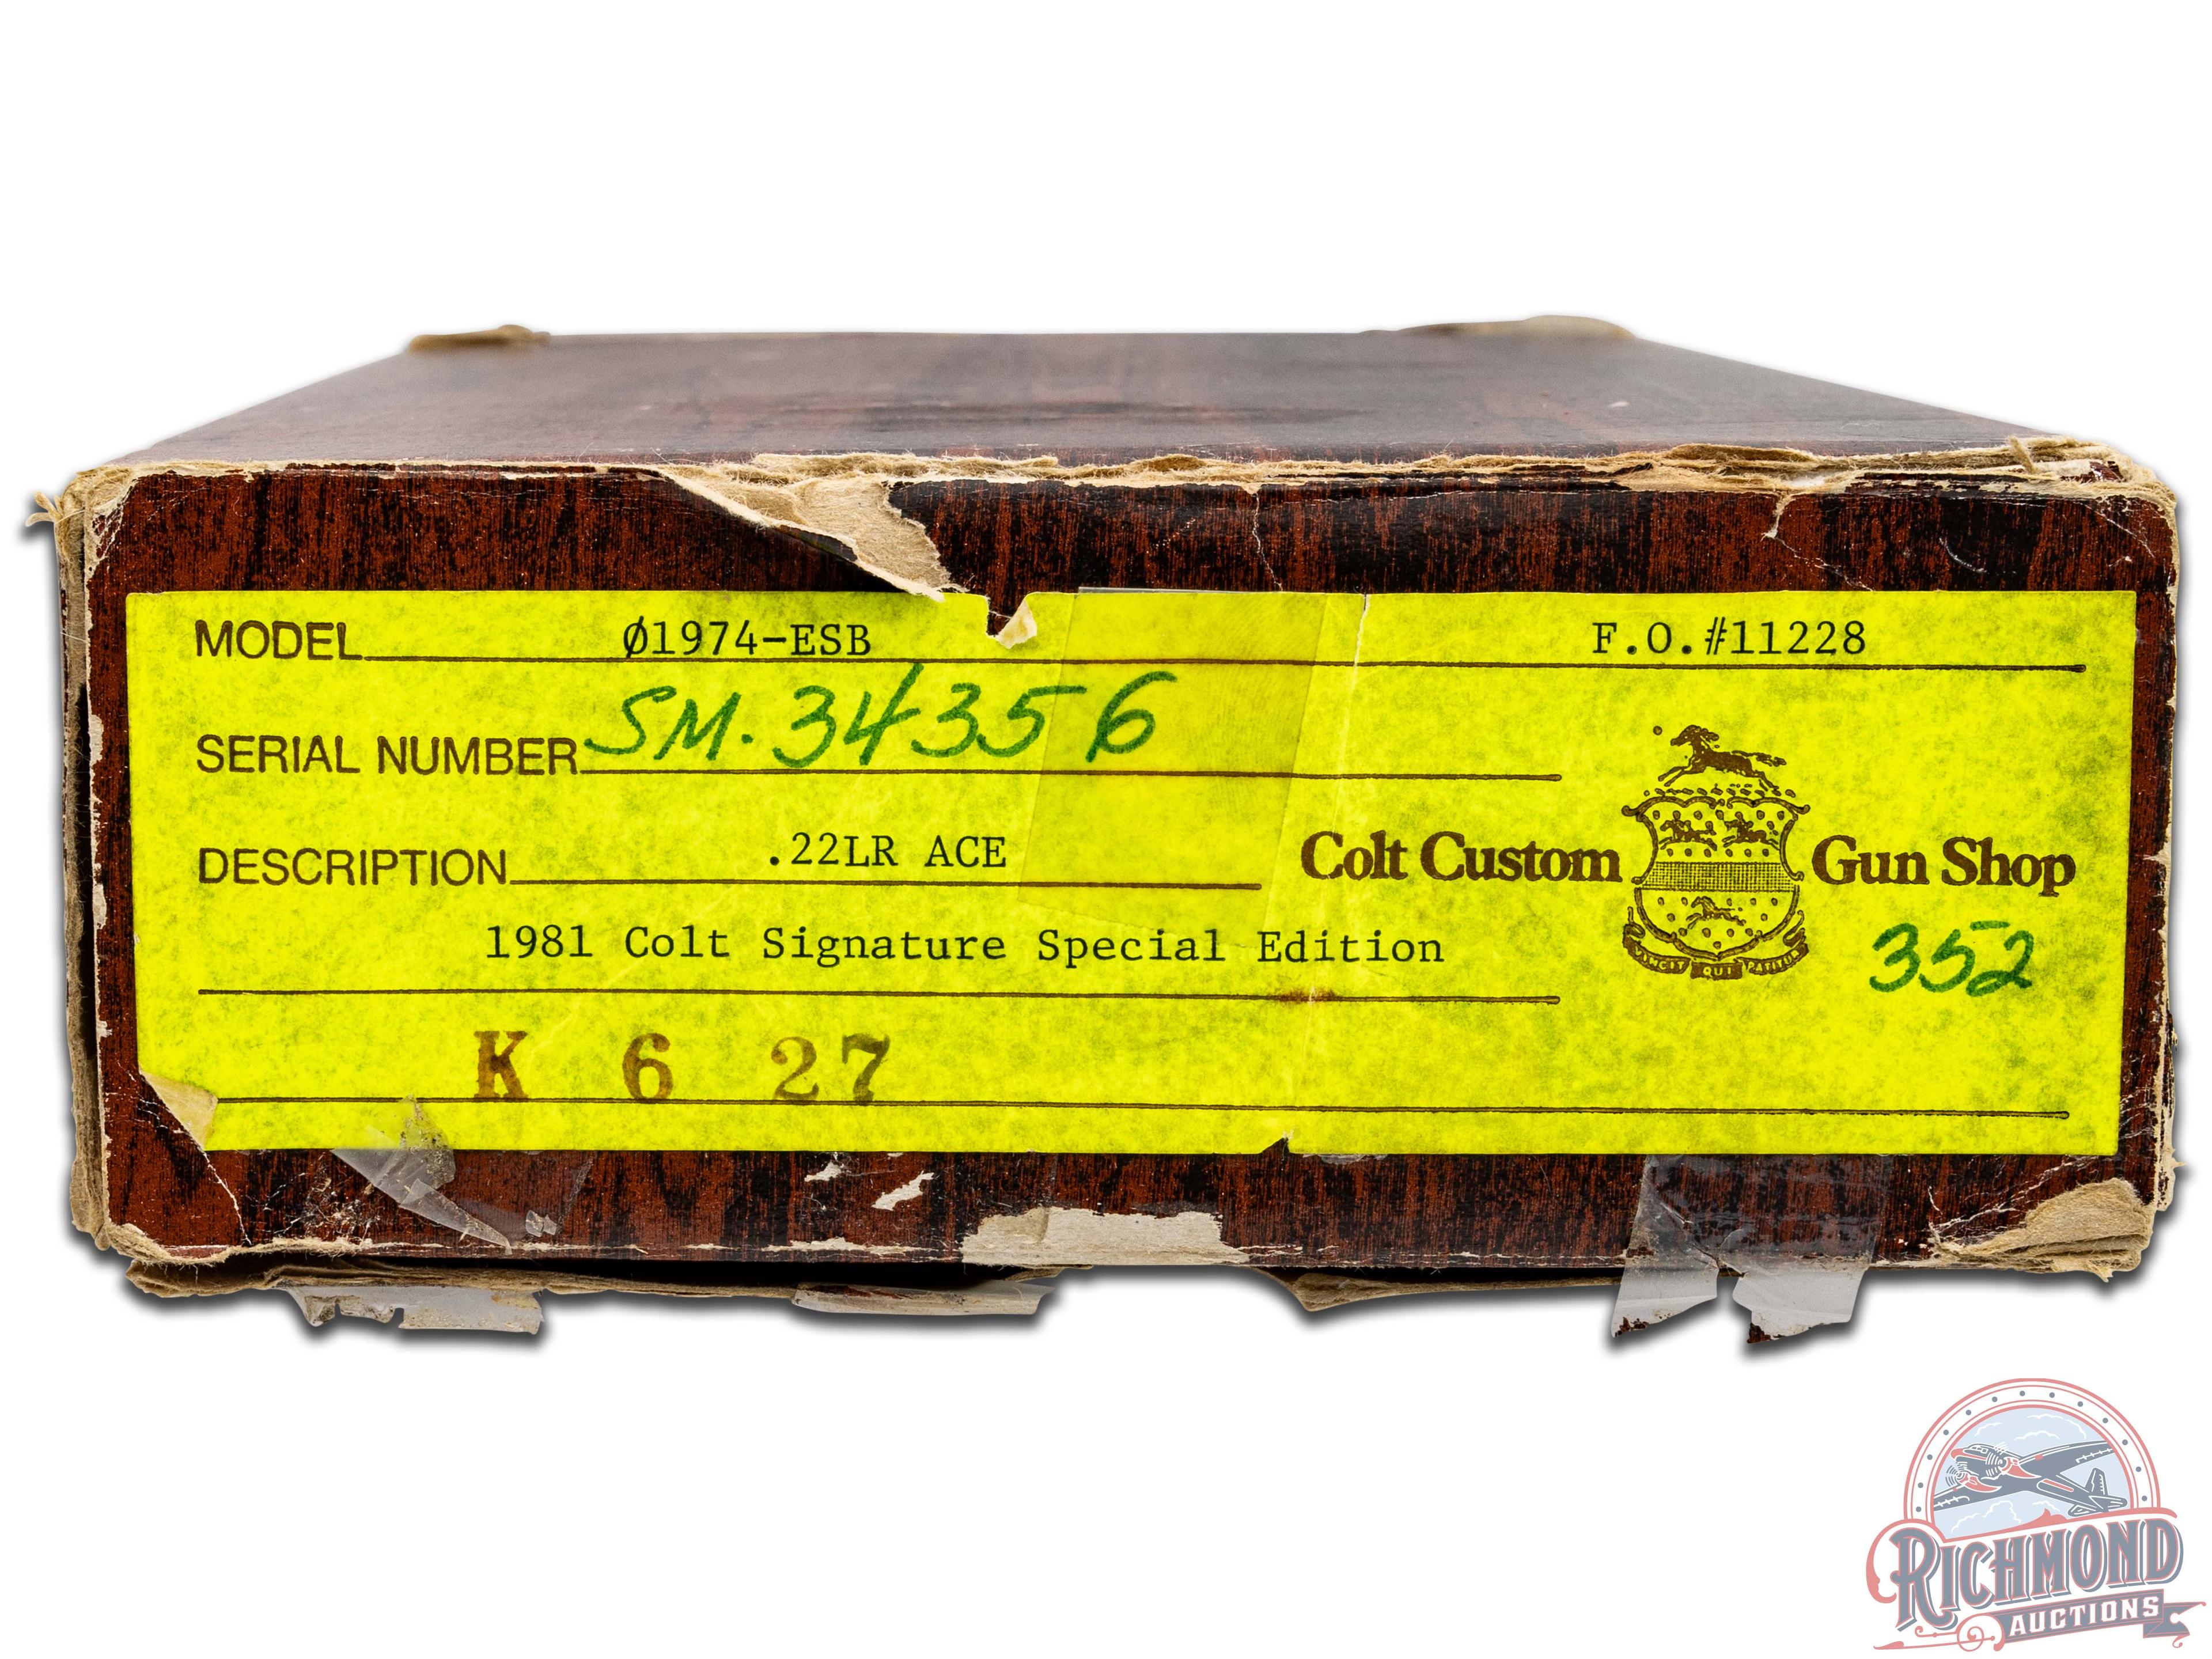 Colt Custom Shop 1981 Signature Special Edition 1911 ACE .22 LR Semi-Auto Pistol in Original Box